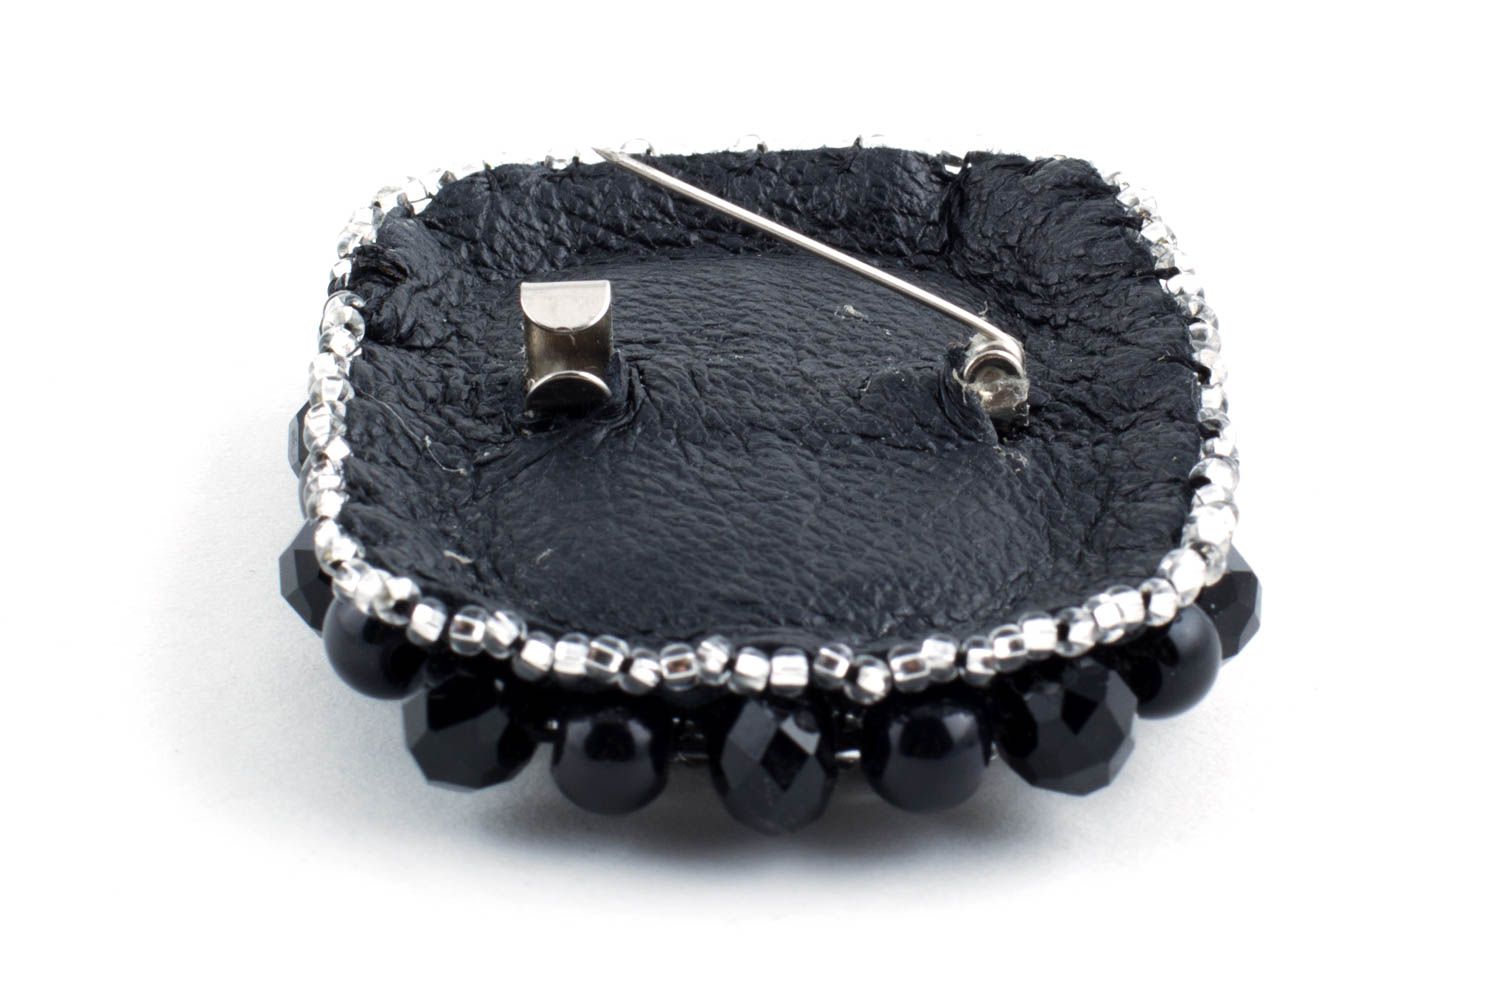 Handmade elegant festive black agate brooch with seed beads on leather basis photo 4